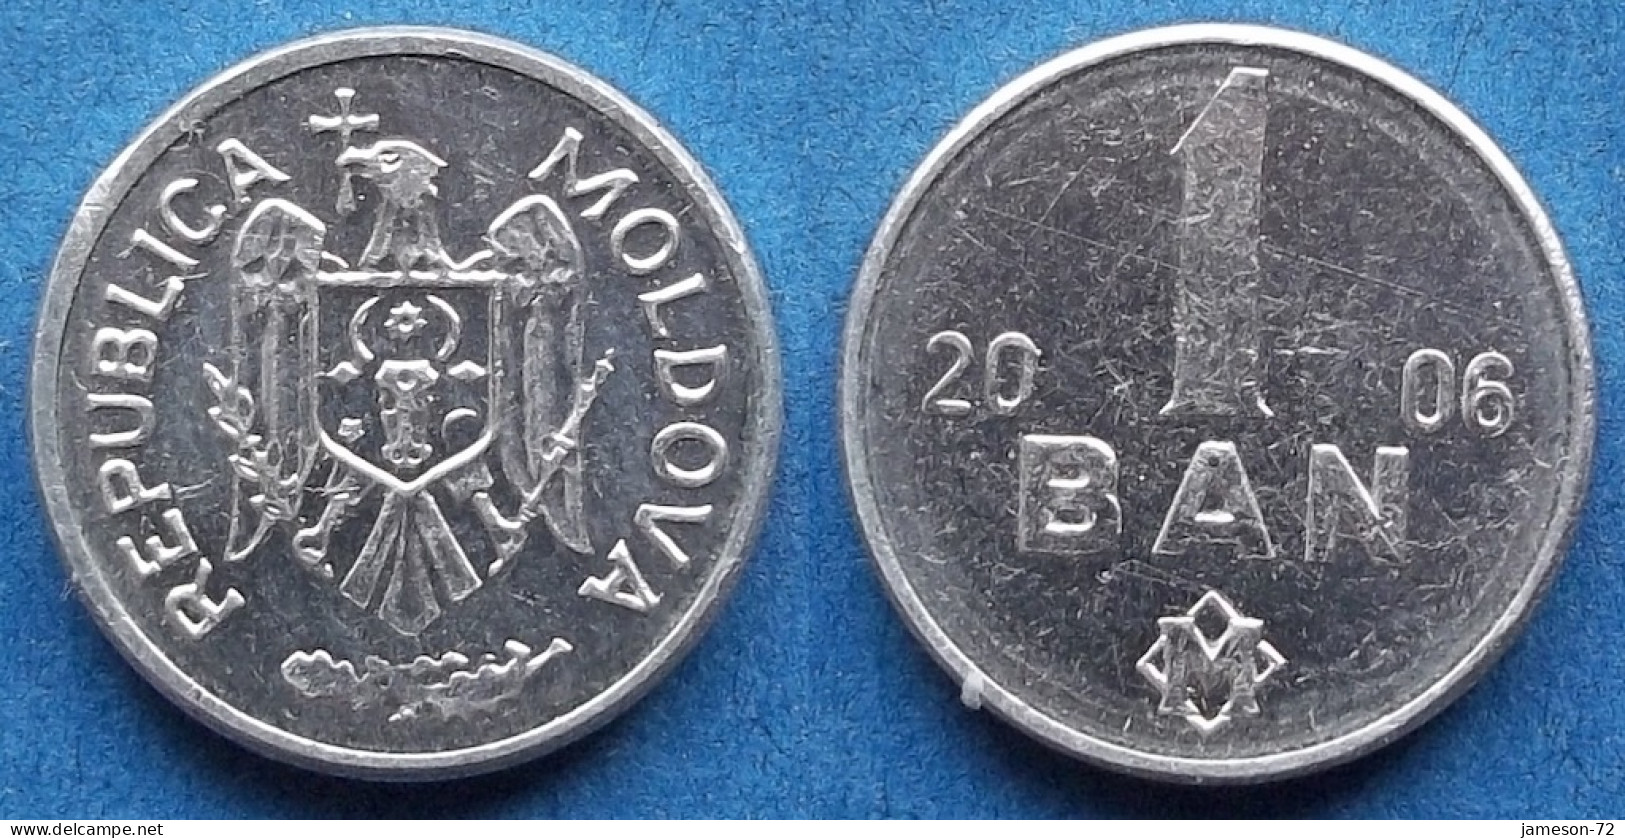 MOLDOVA - 1 Ban 2006 KM# 1 Republic (1991) - Edelweiss Coins - Moldova